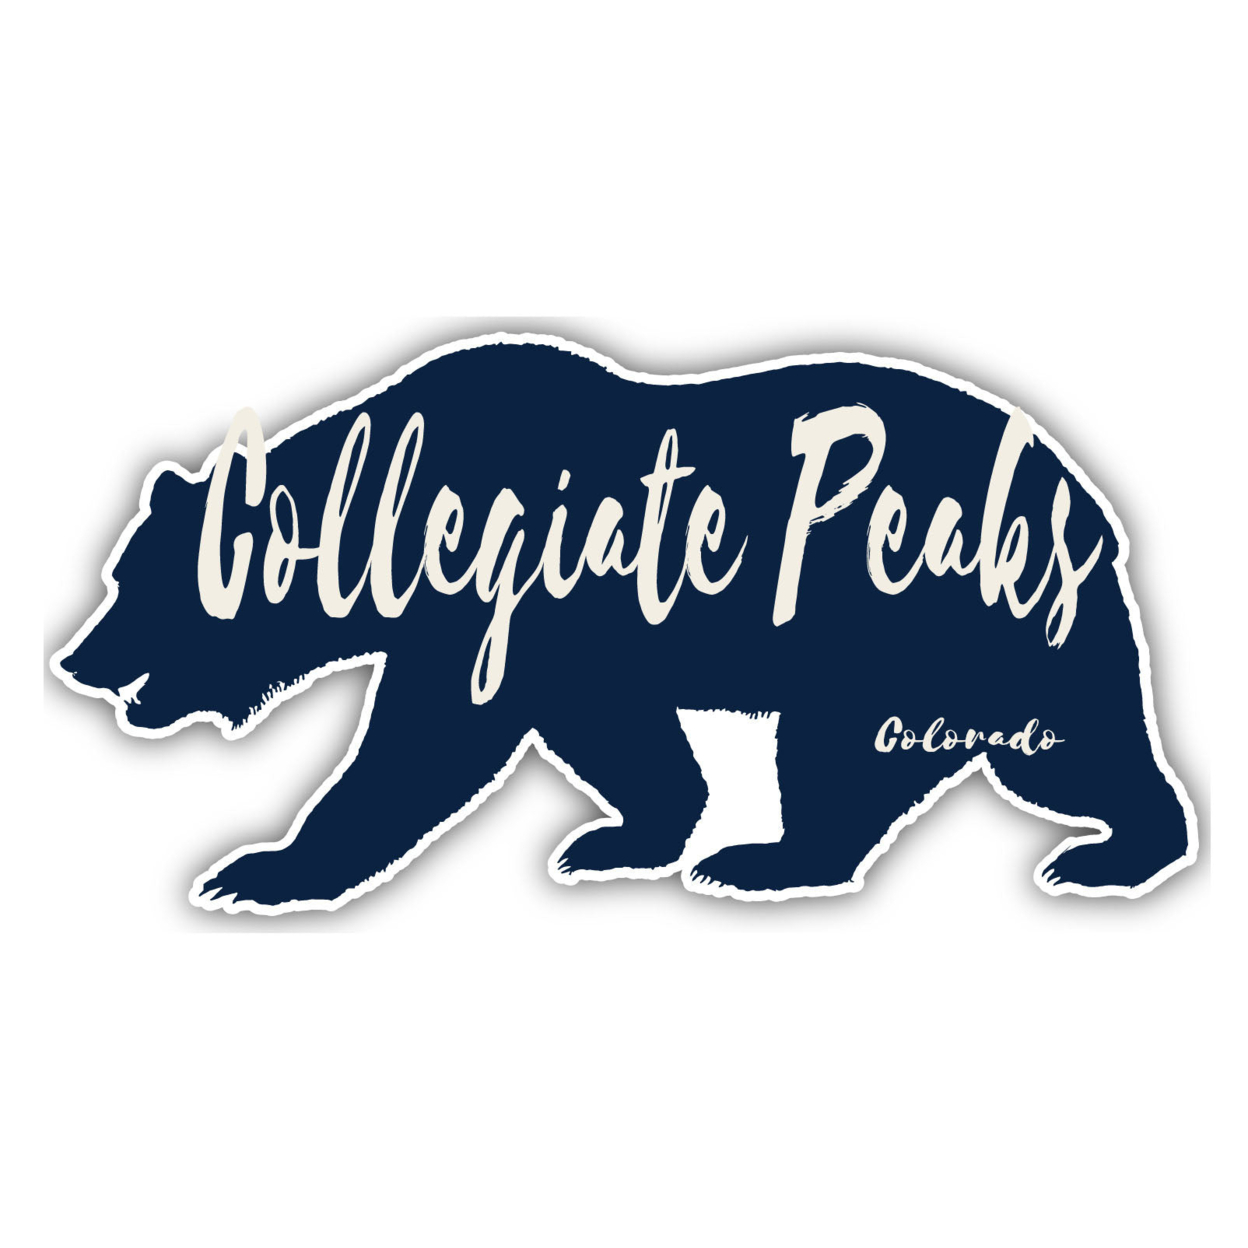 Collegiate Peaks Colorado Souvenir Decorative Stickers (Choose Theme And Size) - Single Unit, 6-Inch, Camp Life